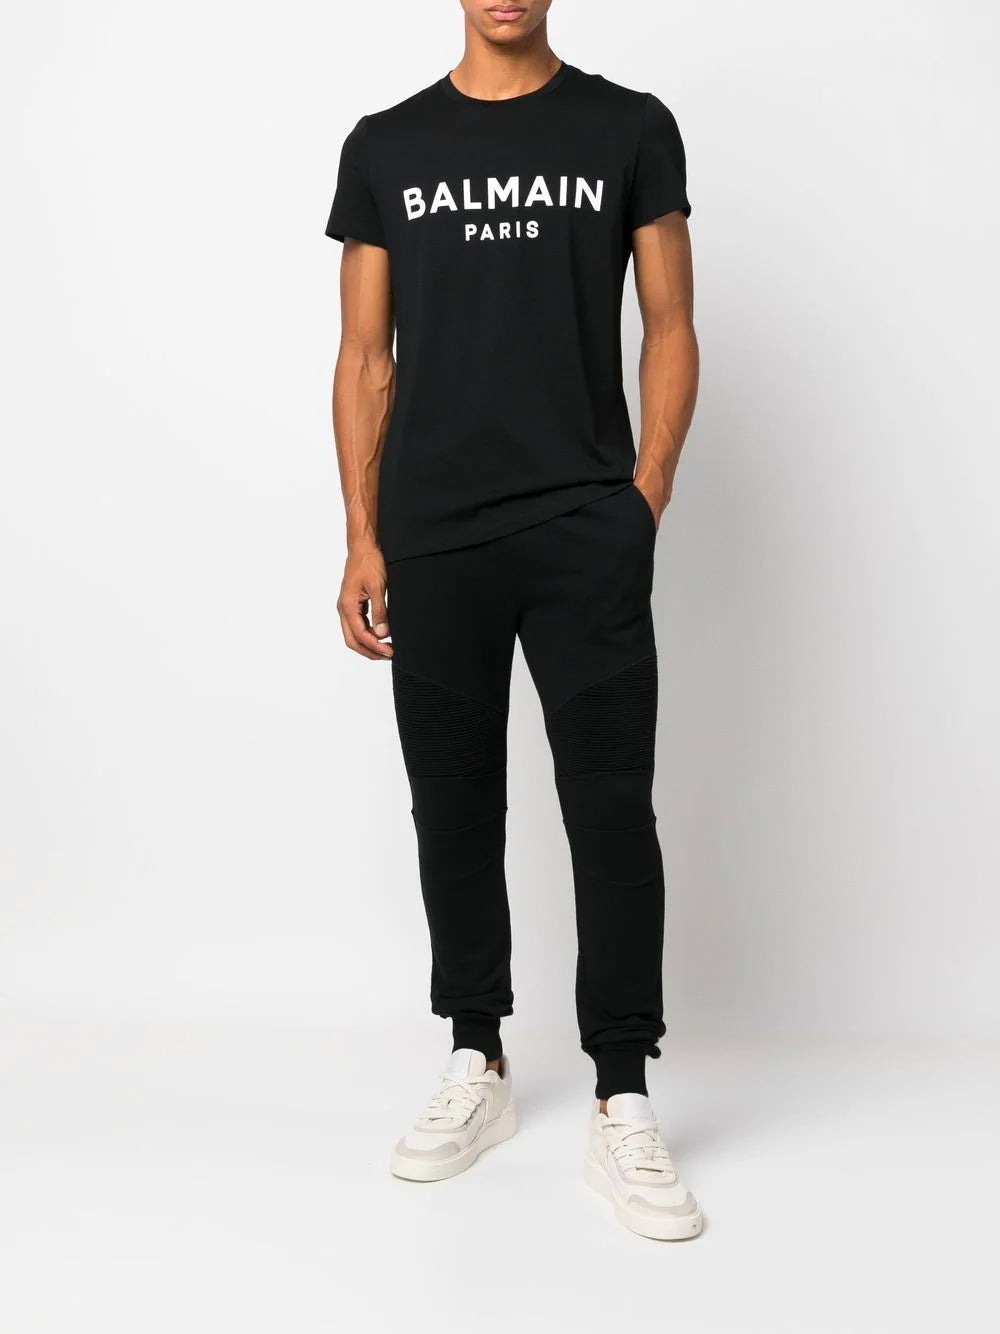 BALMAIN Logo Print T-Shirt Black/White - MAISONDEFASHION.COM